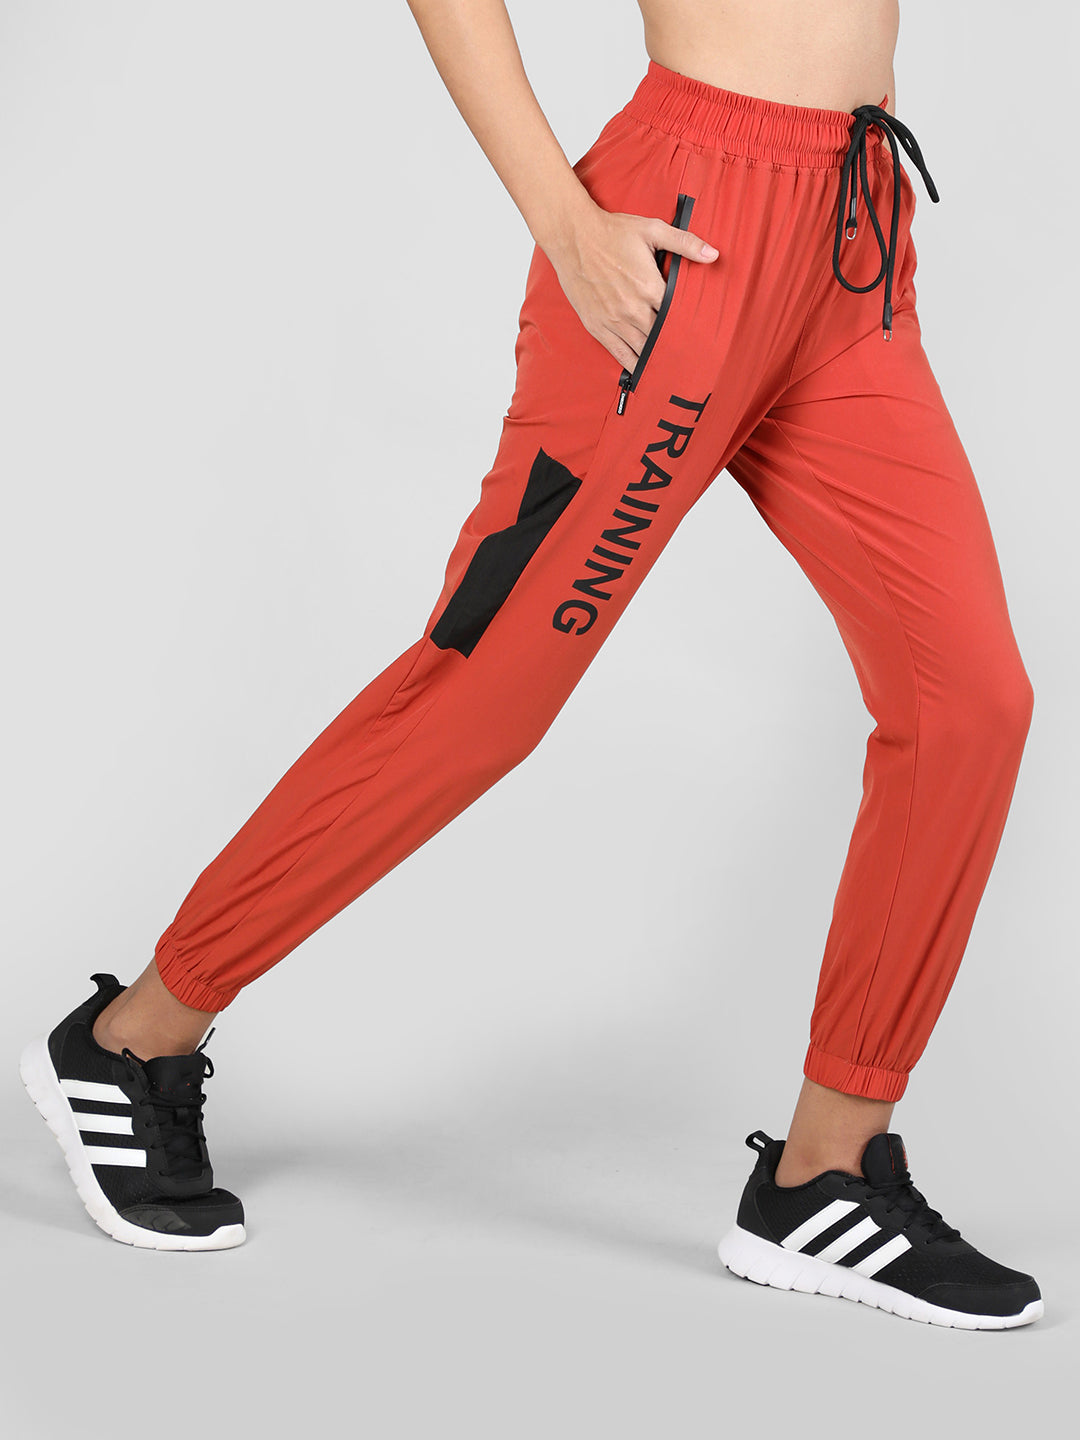 Buy HELISHA Gym wear Leggings| Yoga Track Pants for Girls & Women  (Black)(Pack of 2) FREE-SIZE(26-32 WAIST-SIZE) (Black With  Blue-Line+White-Line, Free-Size(26-32 Waist)) online | Looksgud.in